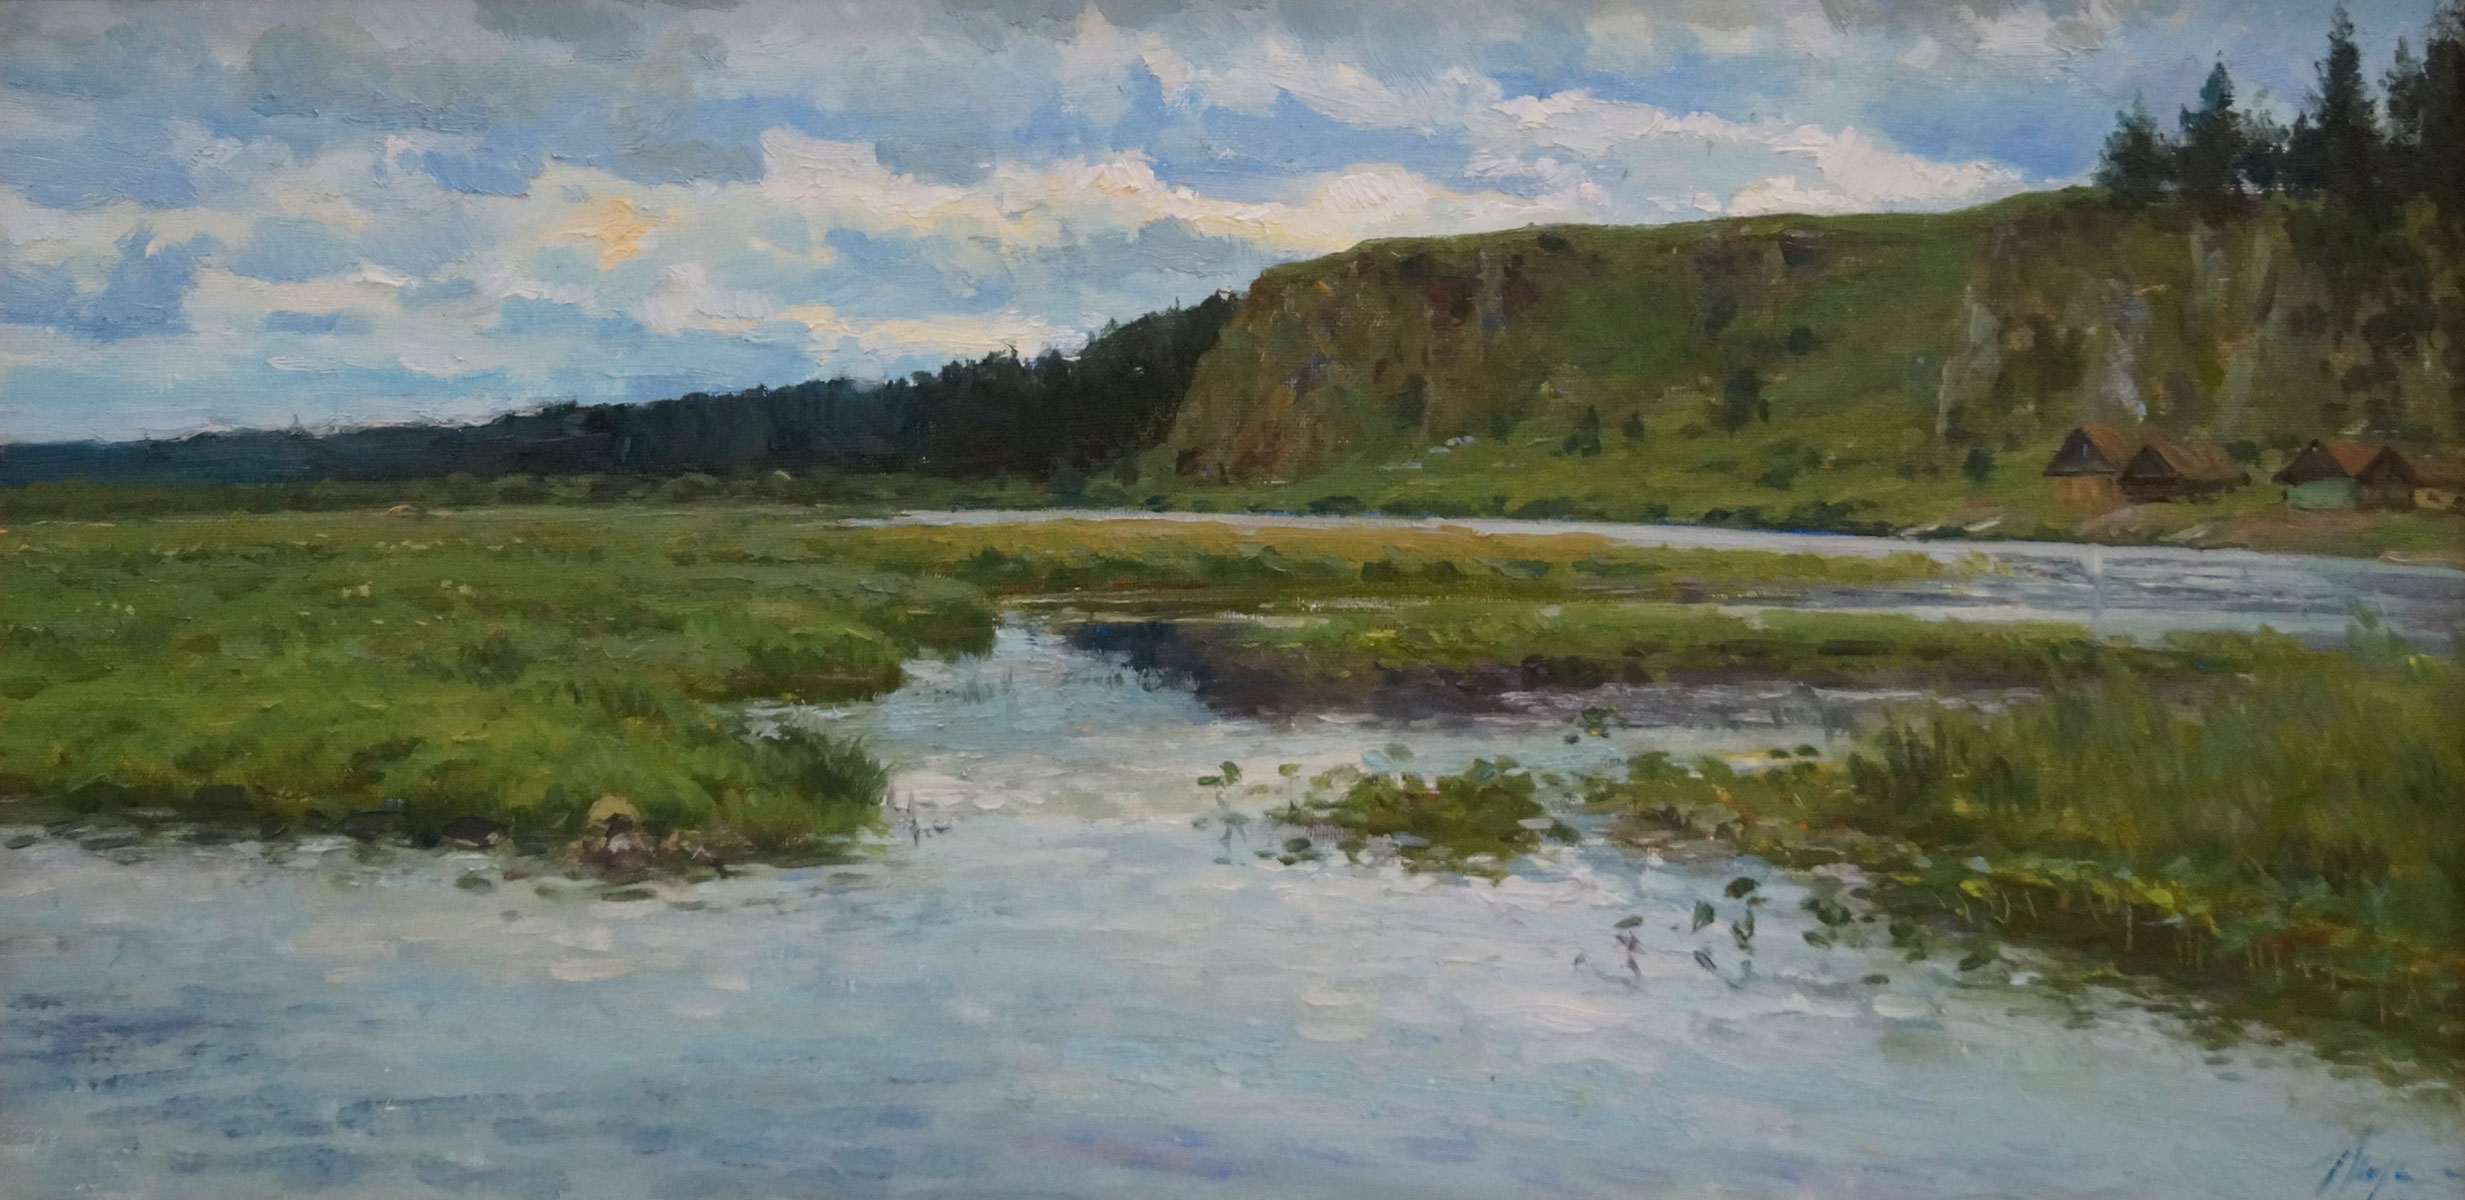 Chusovaya River Flows, Rustem Khuzin, Buy the painting Oil